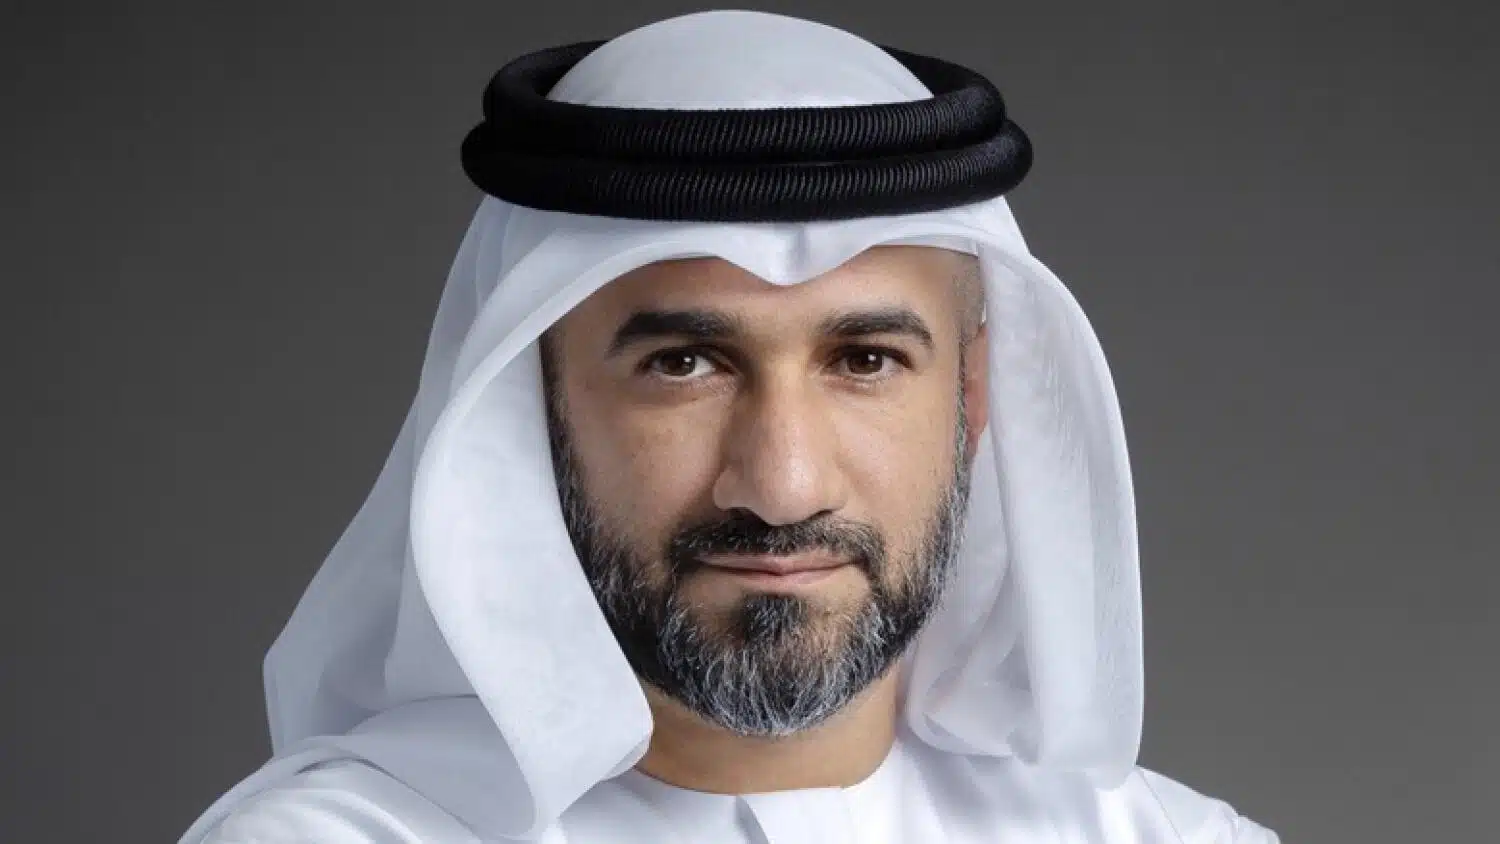 Abdul Baset Al Janahi, CEO of Dubai SME